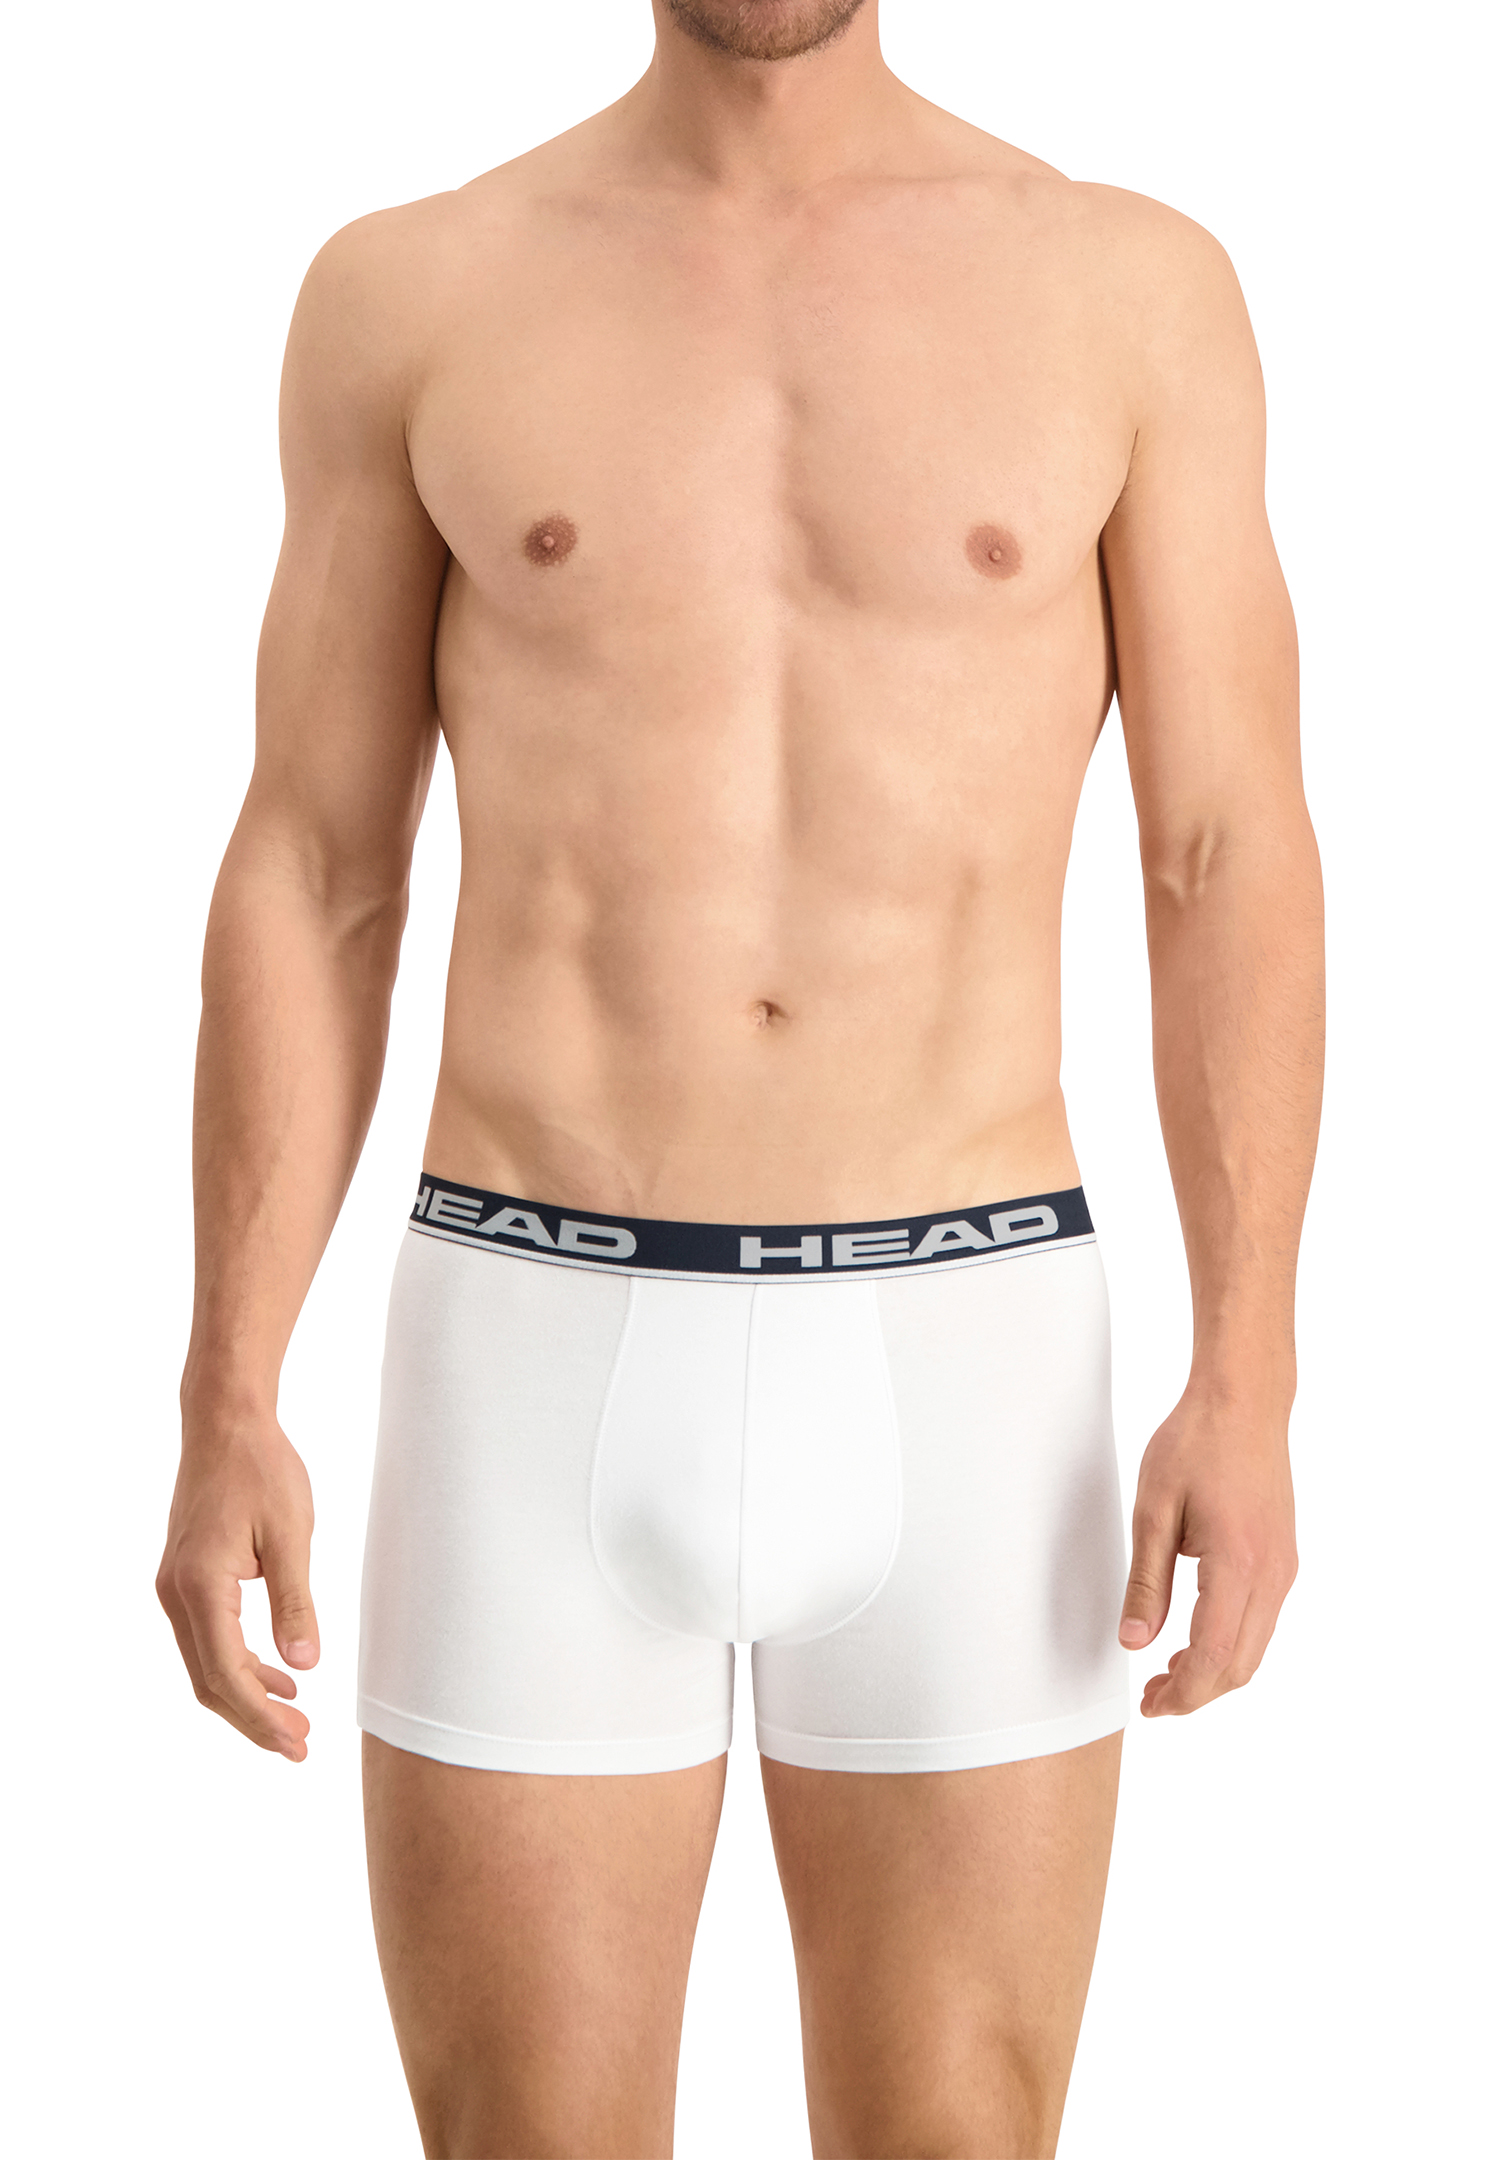 Head Herren Basic Boxer Pant Shorts Unterwäsche Unterhose 2 er Pack 